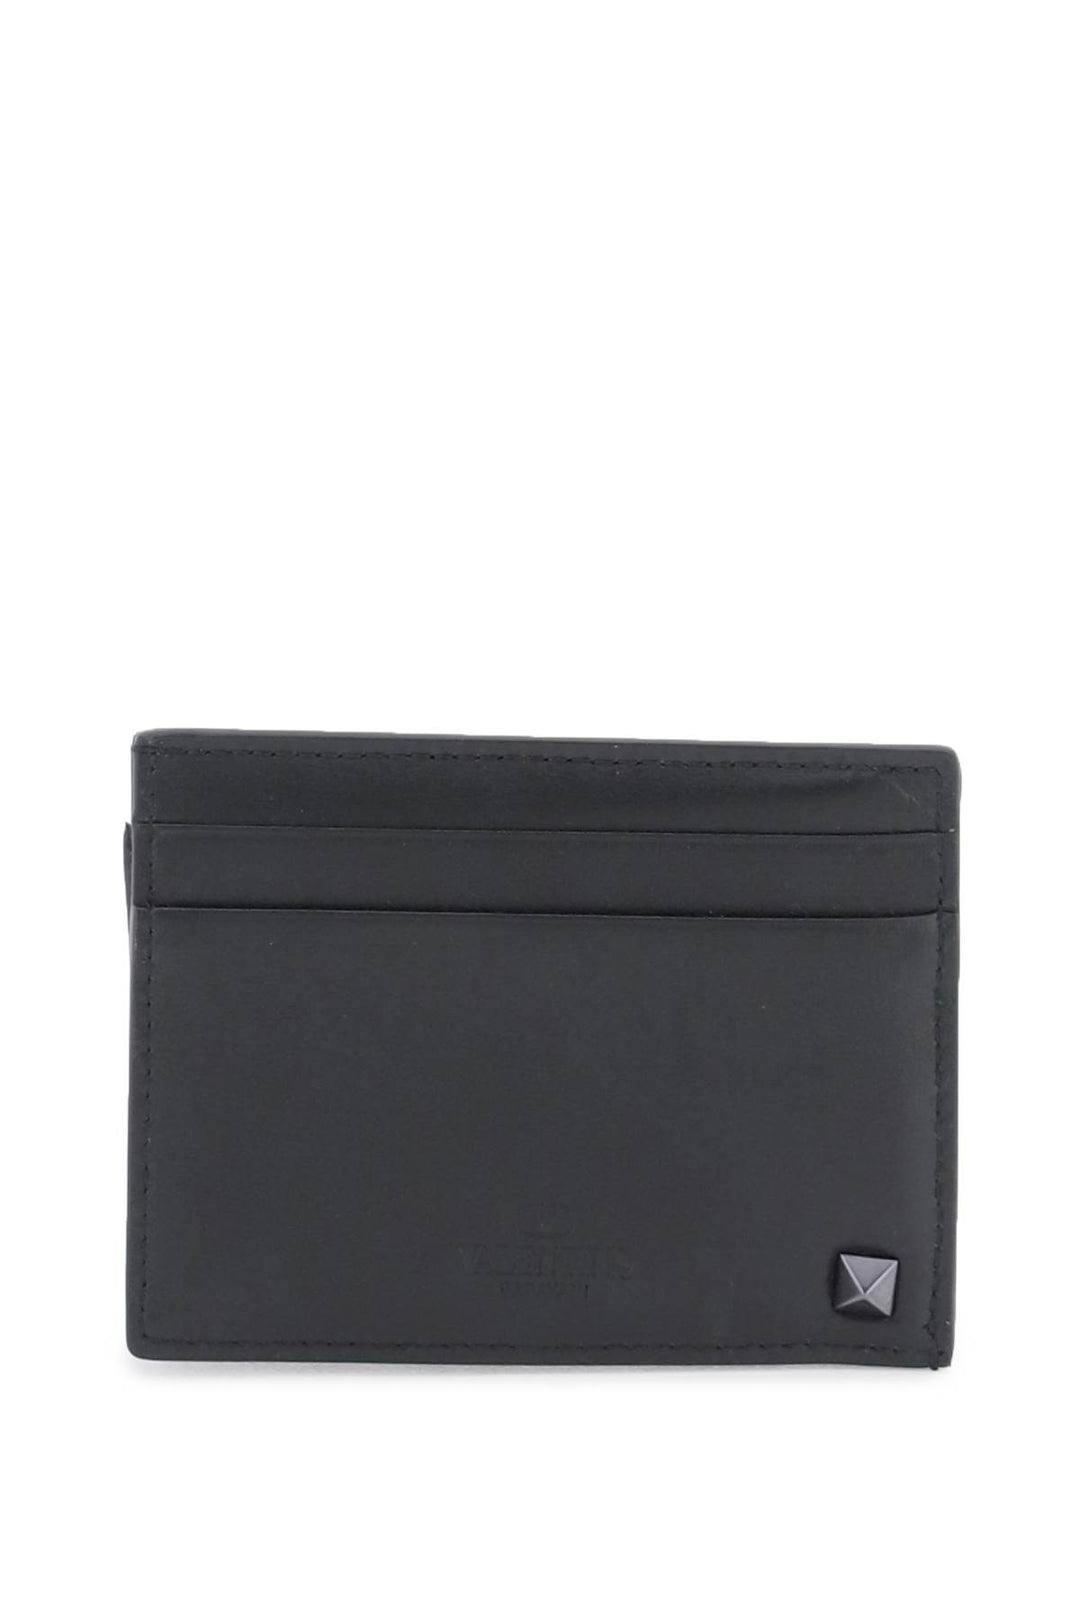 Valentino Garavani Rockstud Leather Card Holder   Nero